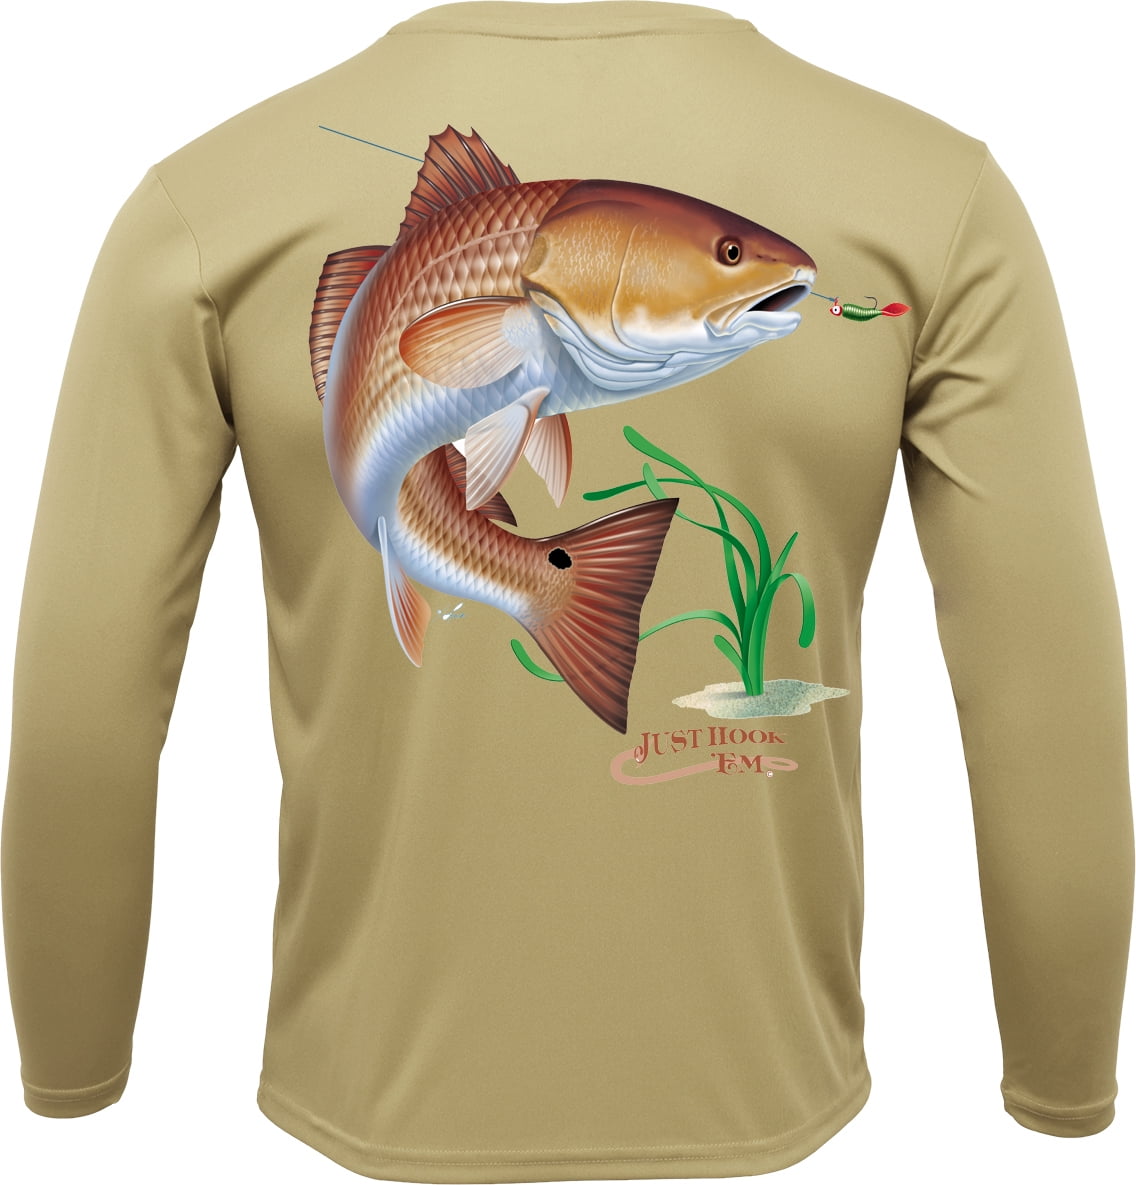 Just Hook 'Em Men's Long Sleeve Sand Redfish Performance Shirt